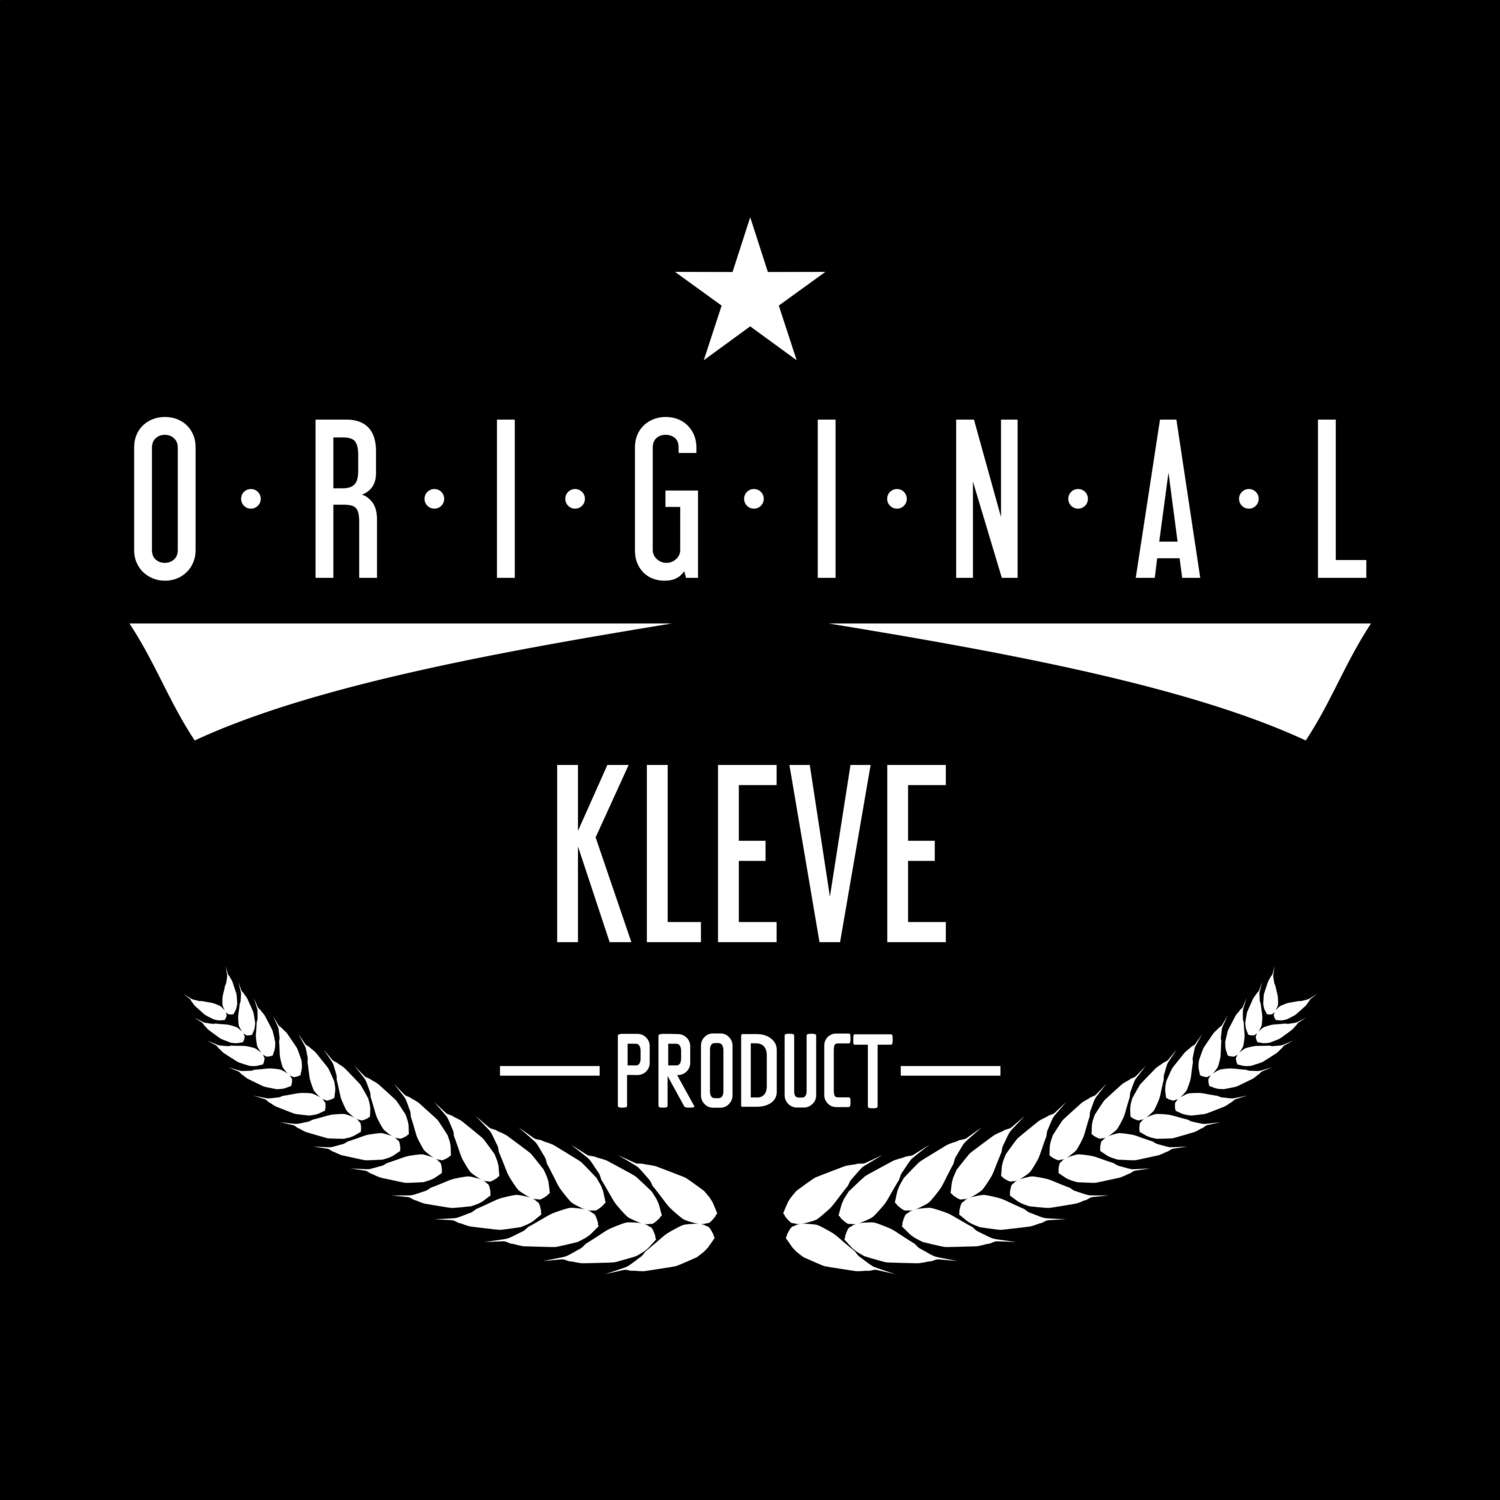 Kleve T-Shirt »Original Product«